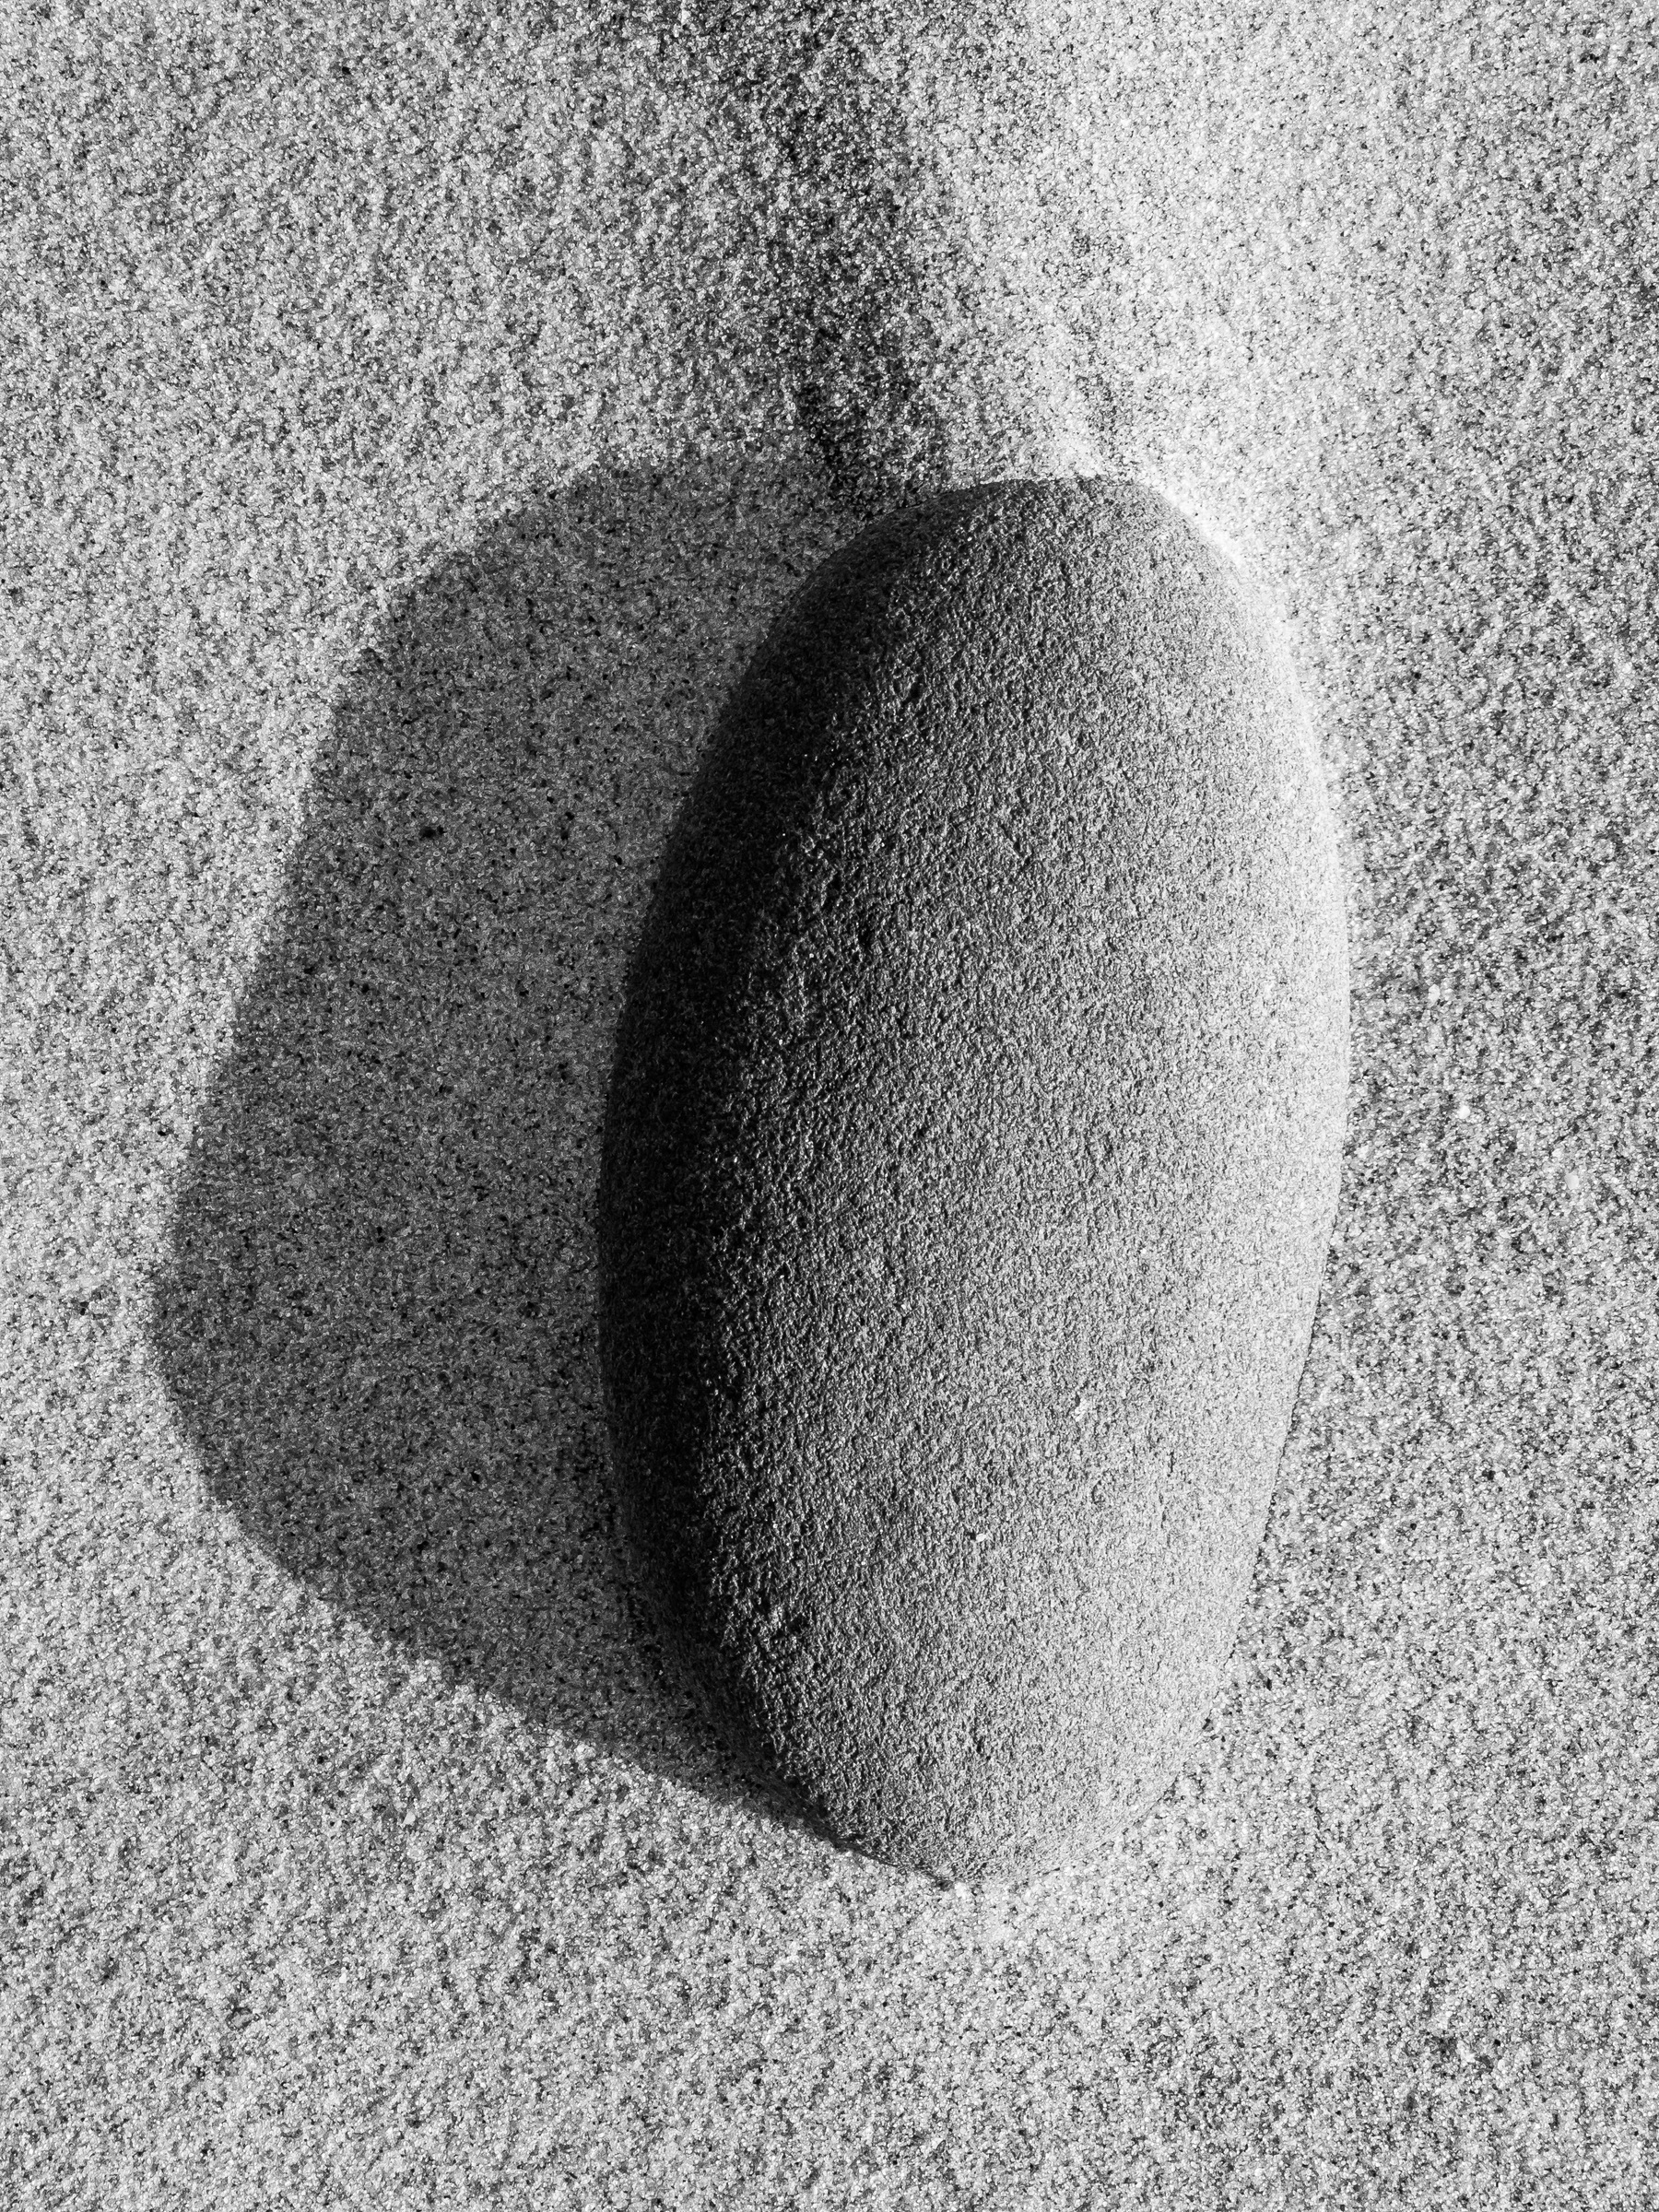 Stone and wind swept sand.